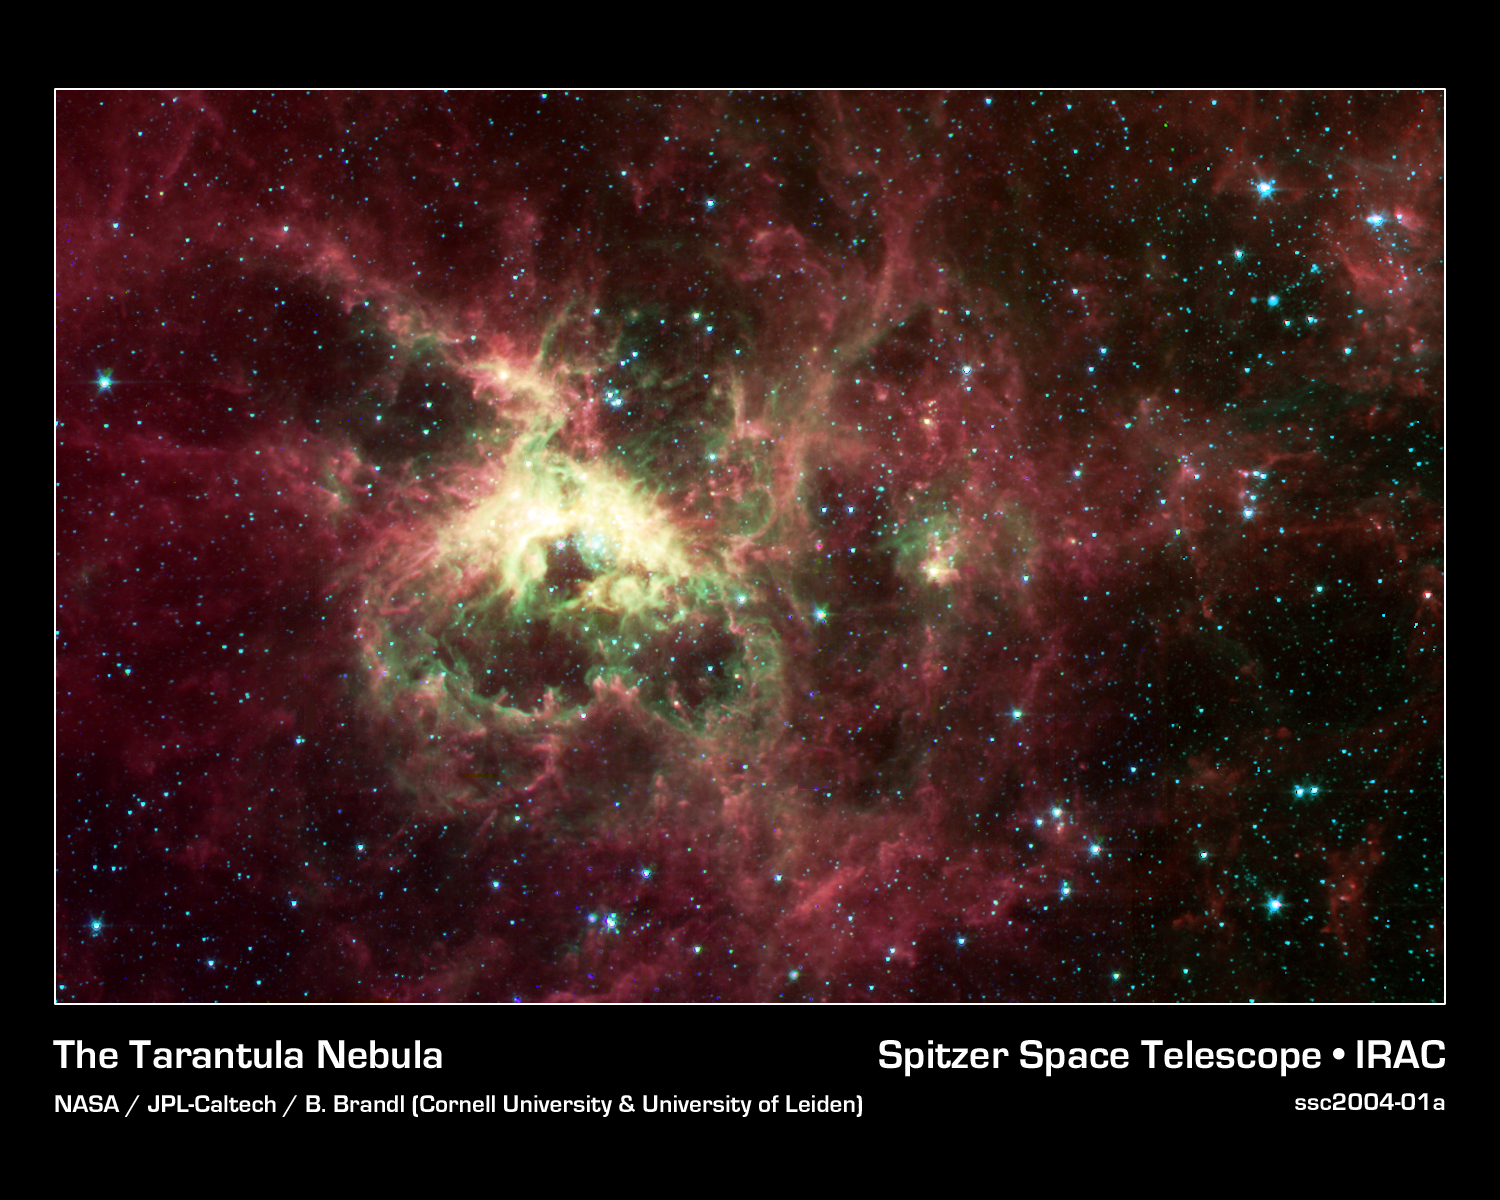 The Tarantula Nebula from Spitzer